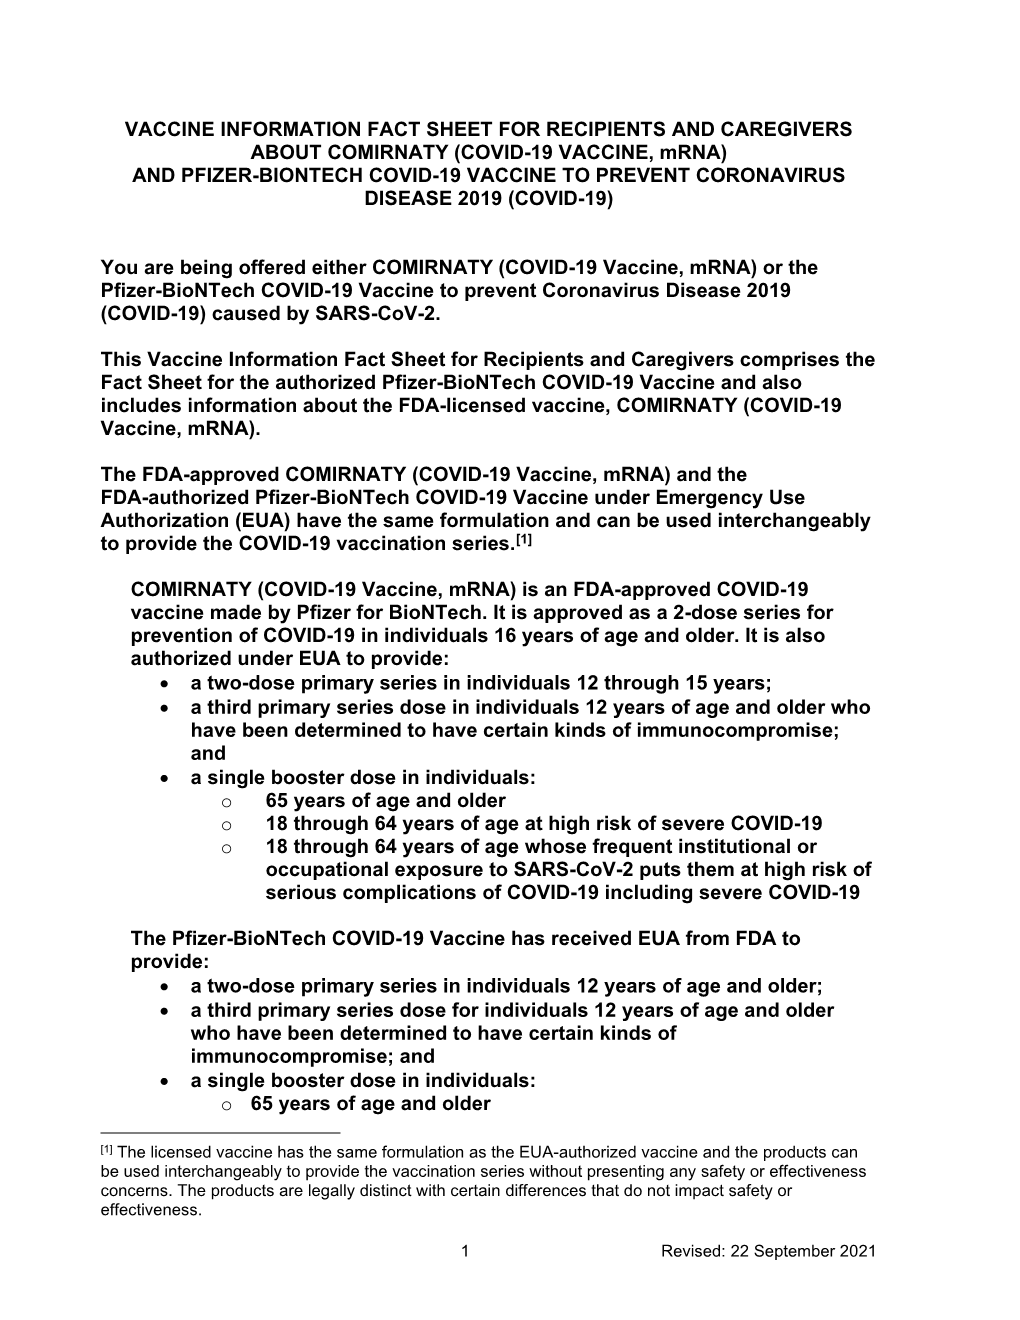 Pfizer-Biontech COVID-19 Vaccine EUA Fact Sheet for Recipients and Caregivers